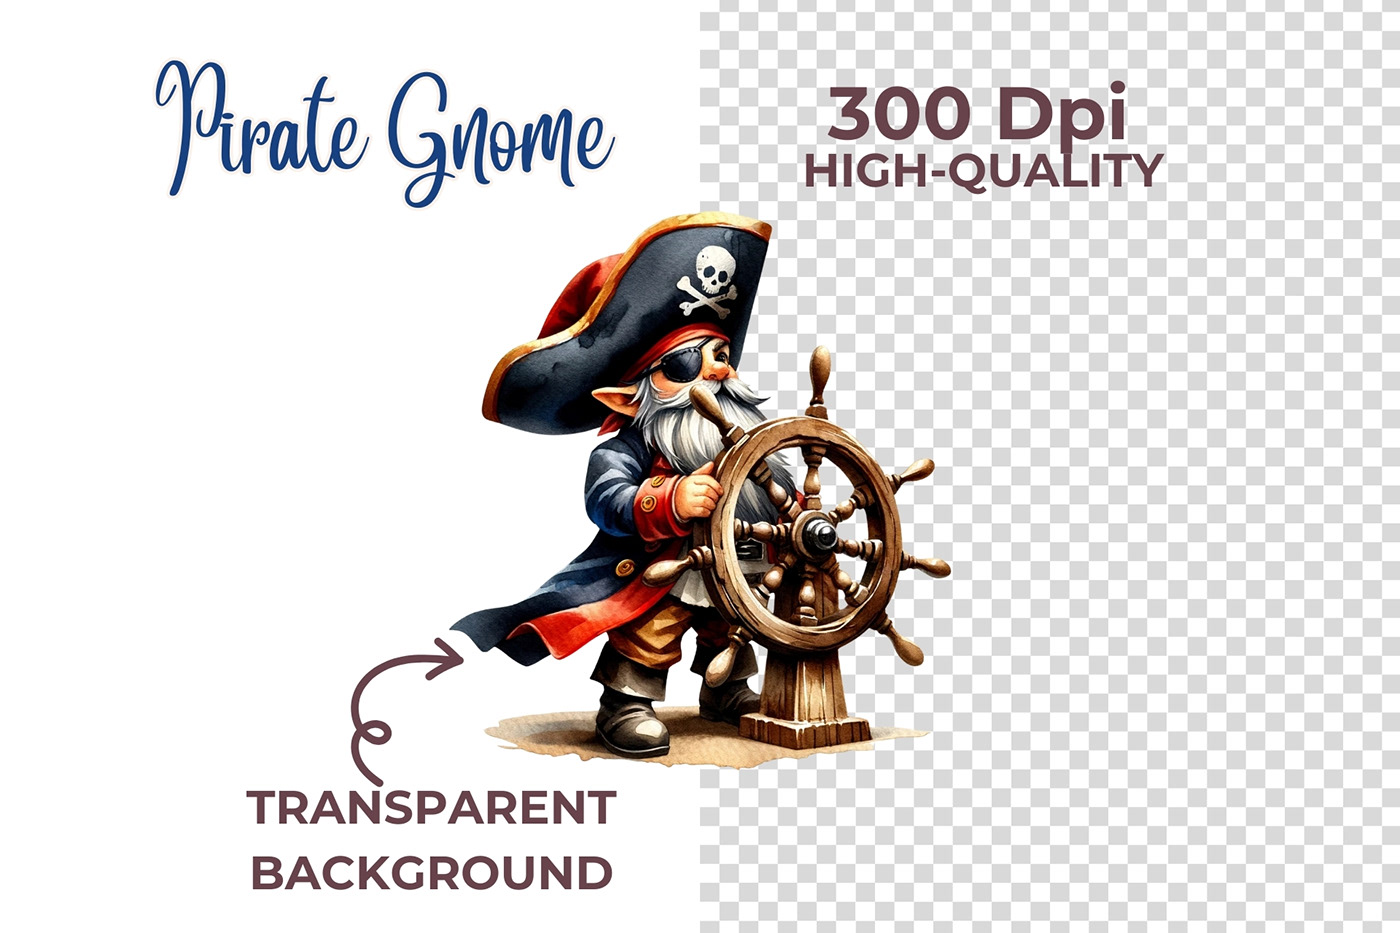 gnome ILLUSTRATION  watercolor clipart Character design  Digital Art  pirate cartoon cute Native